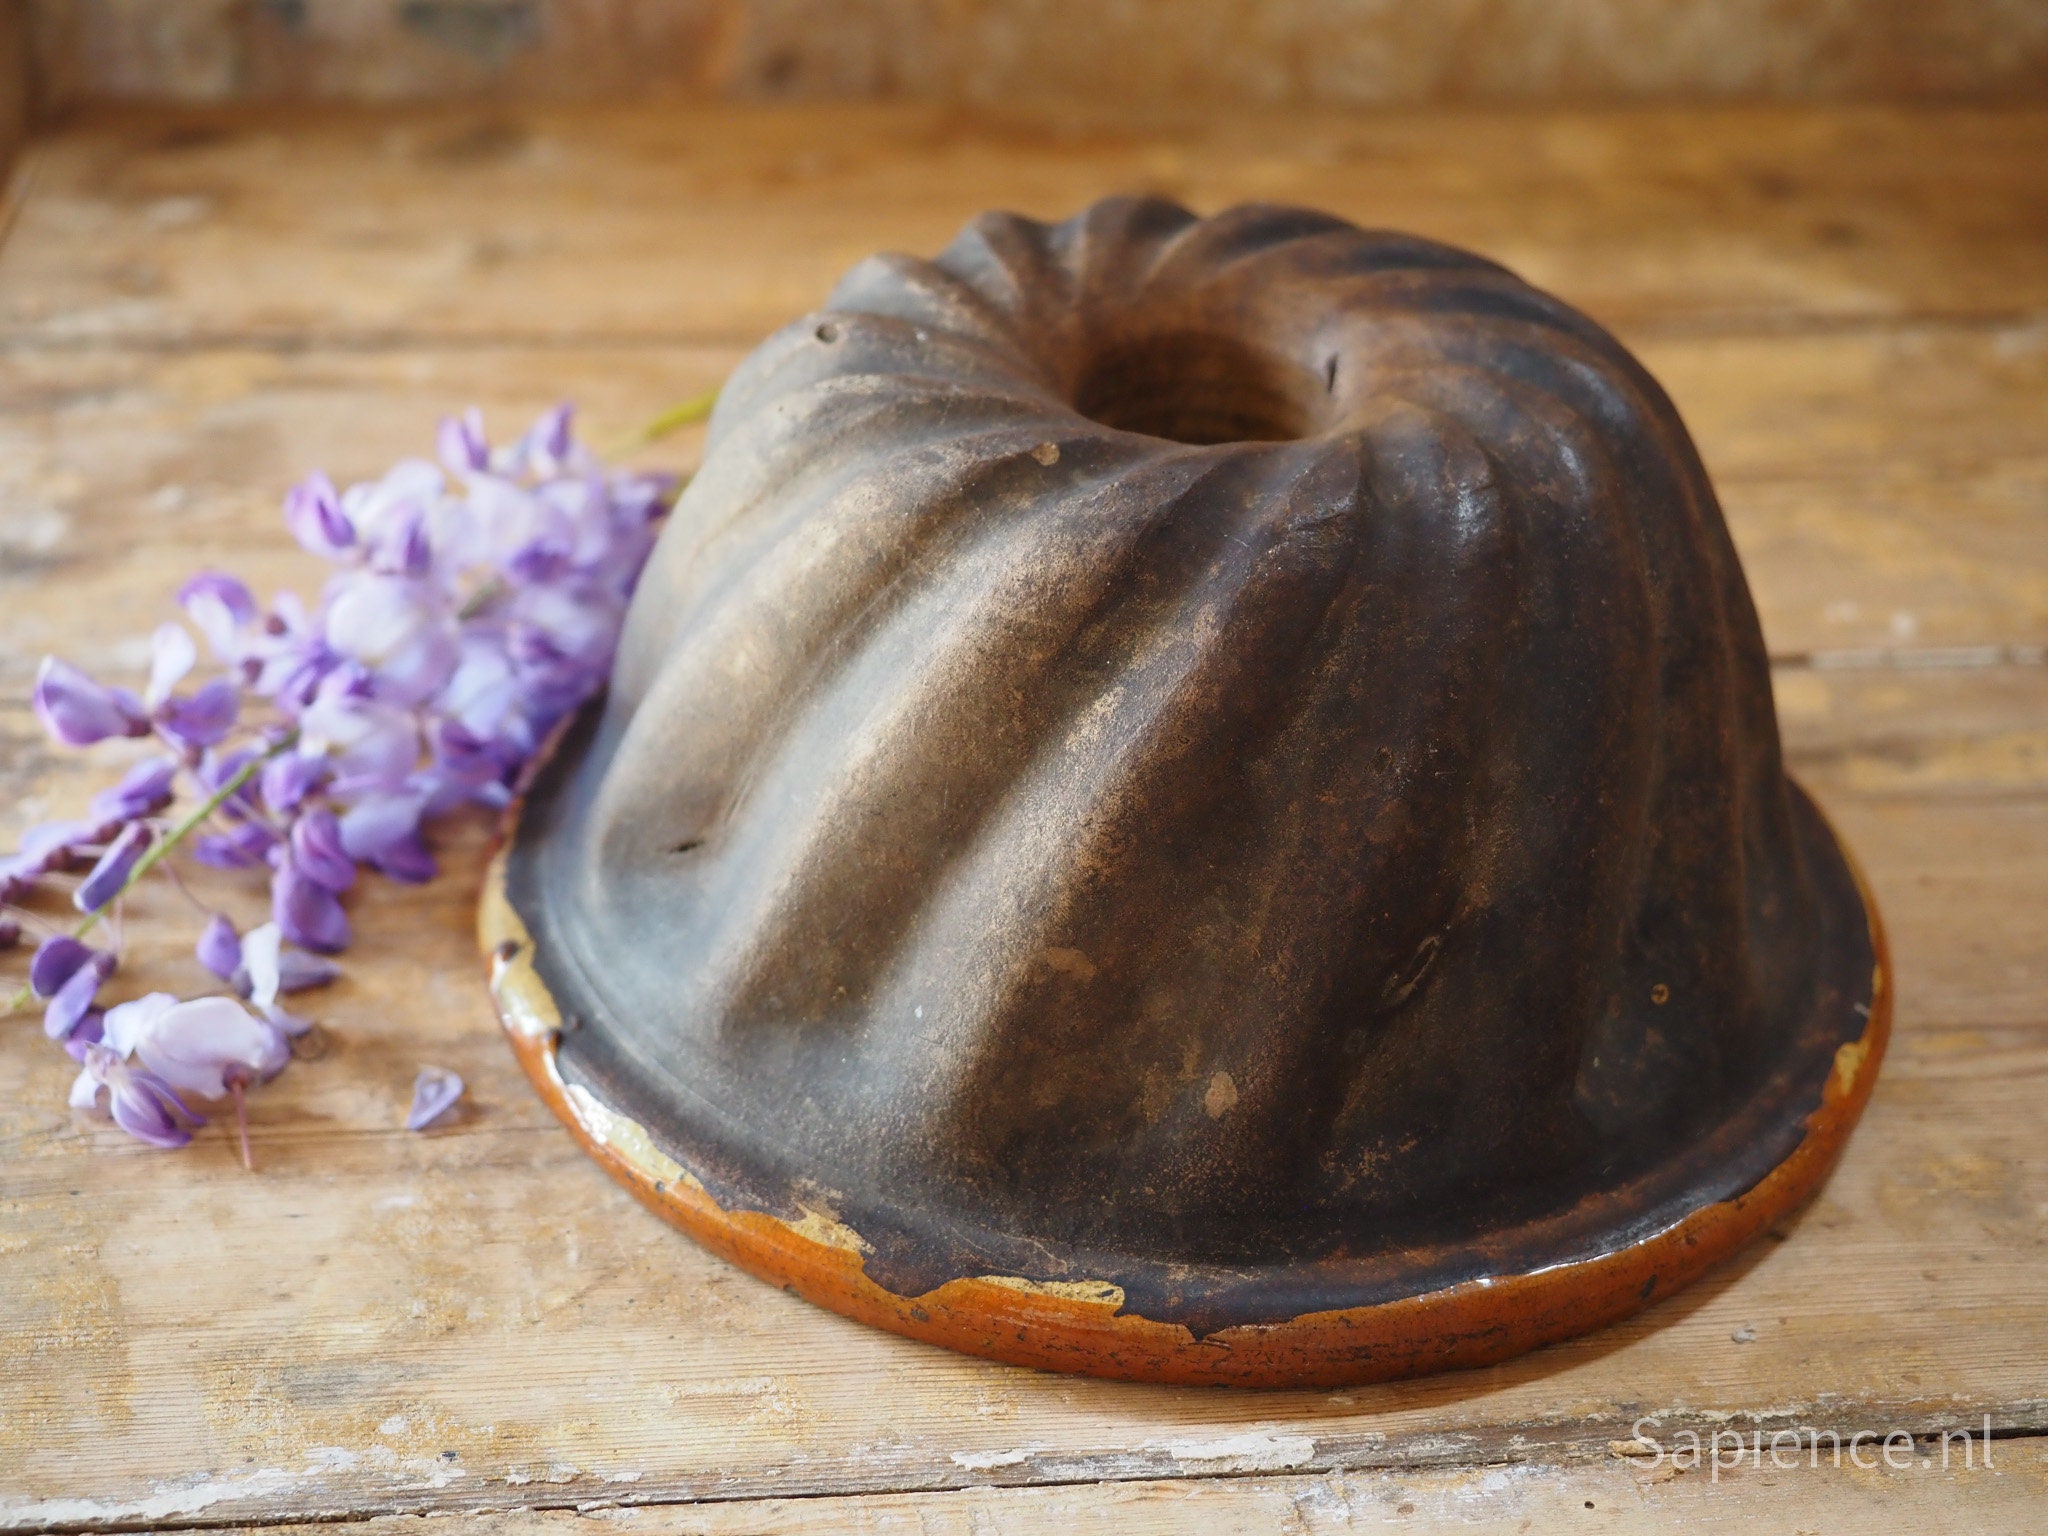 French Ceramic Bundt Cake Mould/ Savarin, Gugelhupf or Brioche Basin,  Vintage Cake Pan 